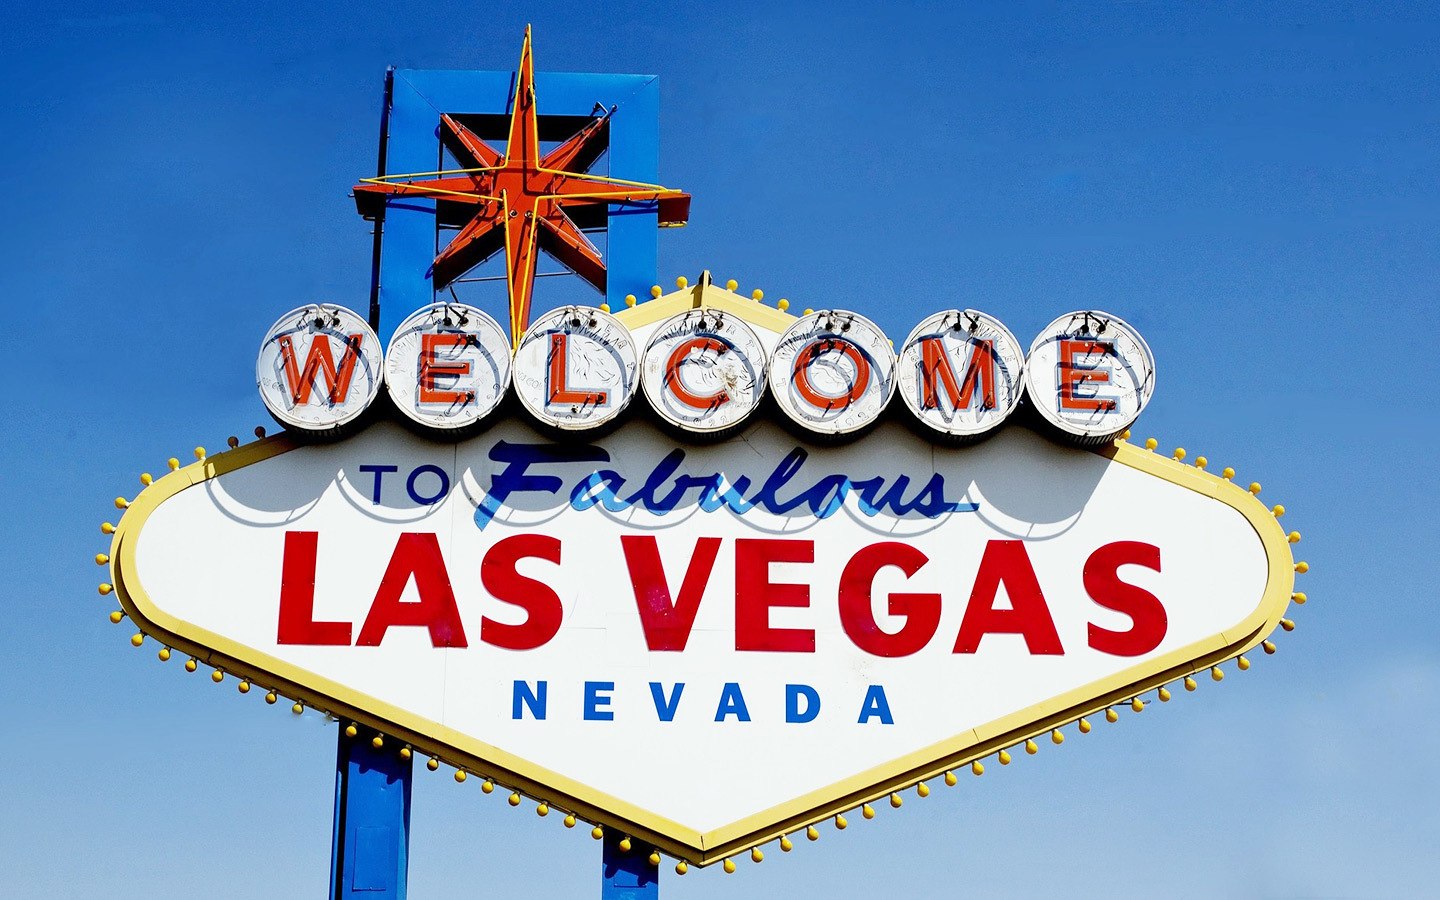 Las Vegas film locations: A Sin City walking tour of Las Vegas, Nevada